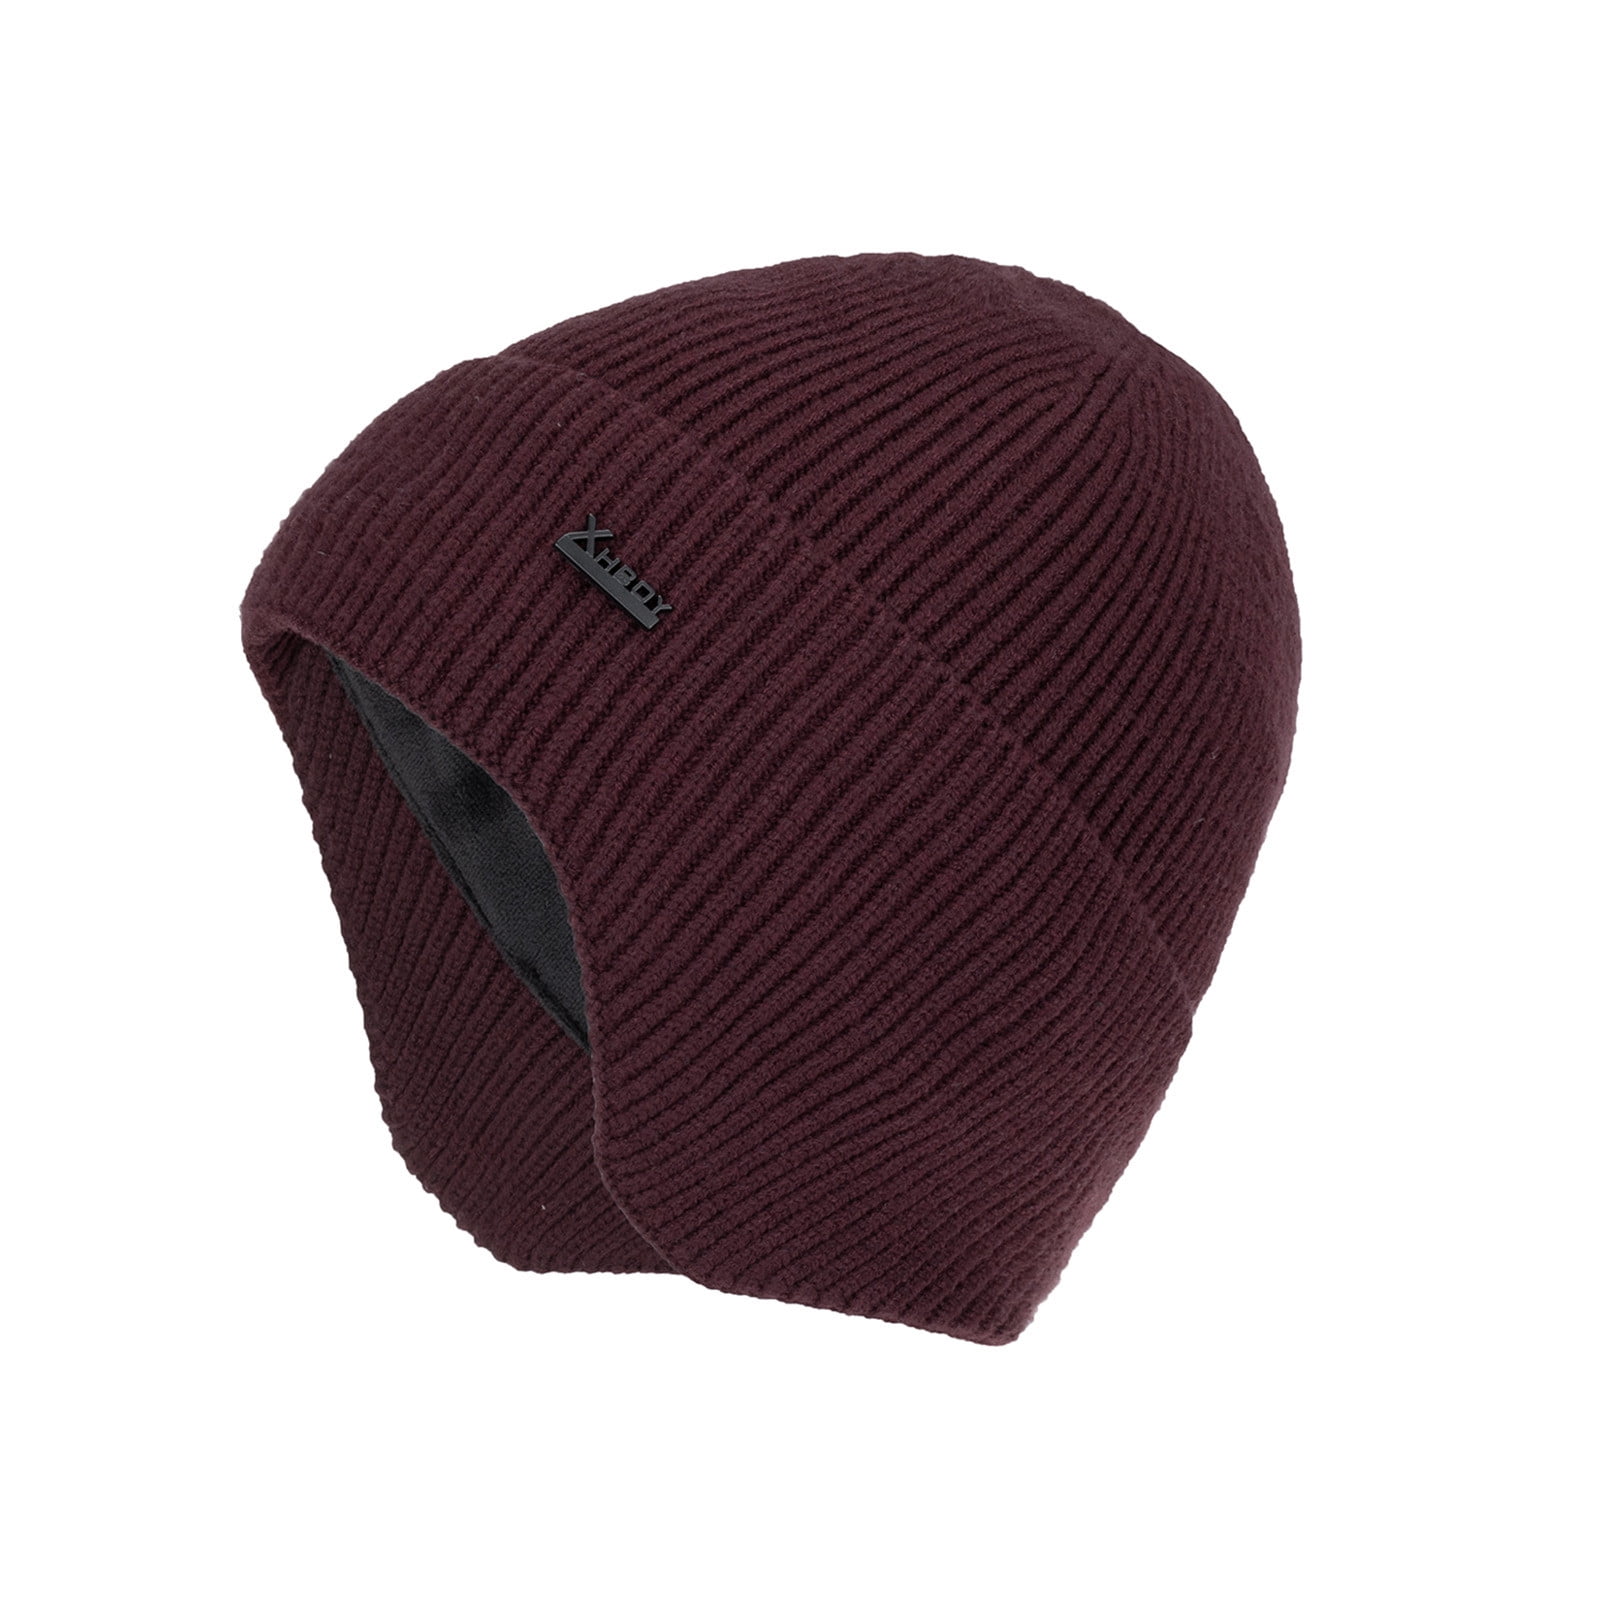 New Unisex Knit Cap Hedging Head Hat Beanie Cap Warm Outdoor Hat Winter Casual Best Gift